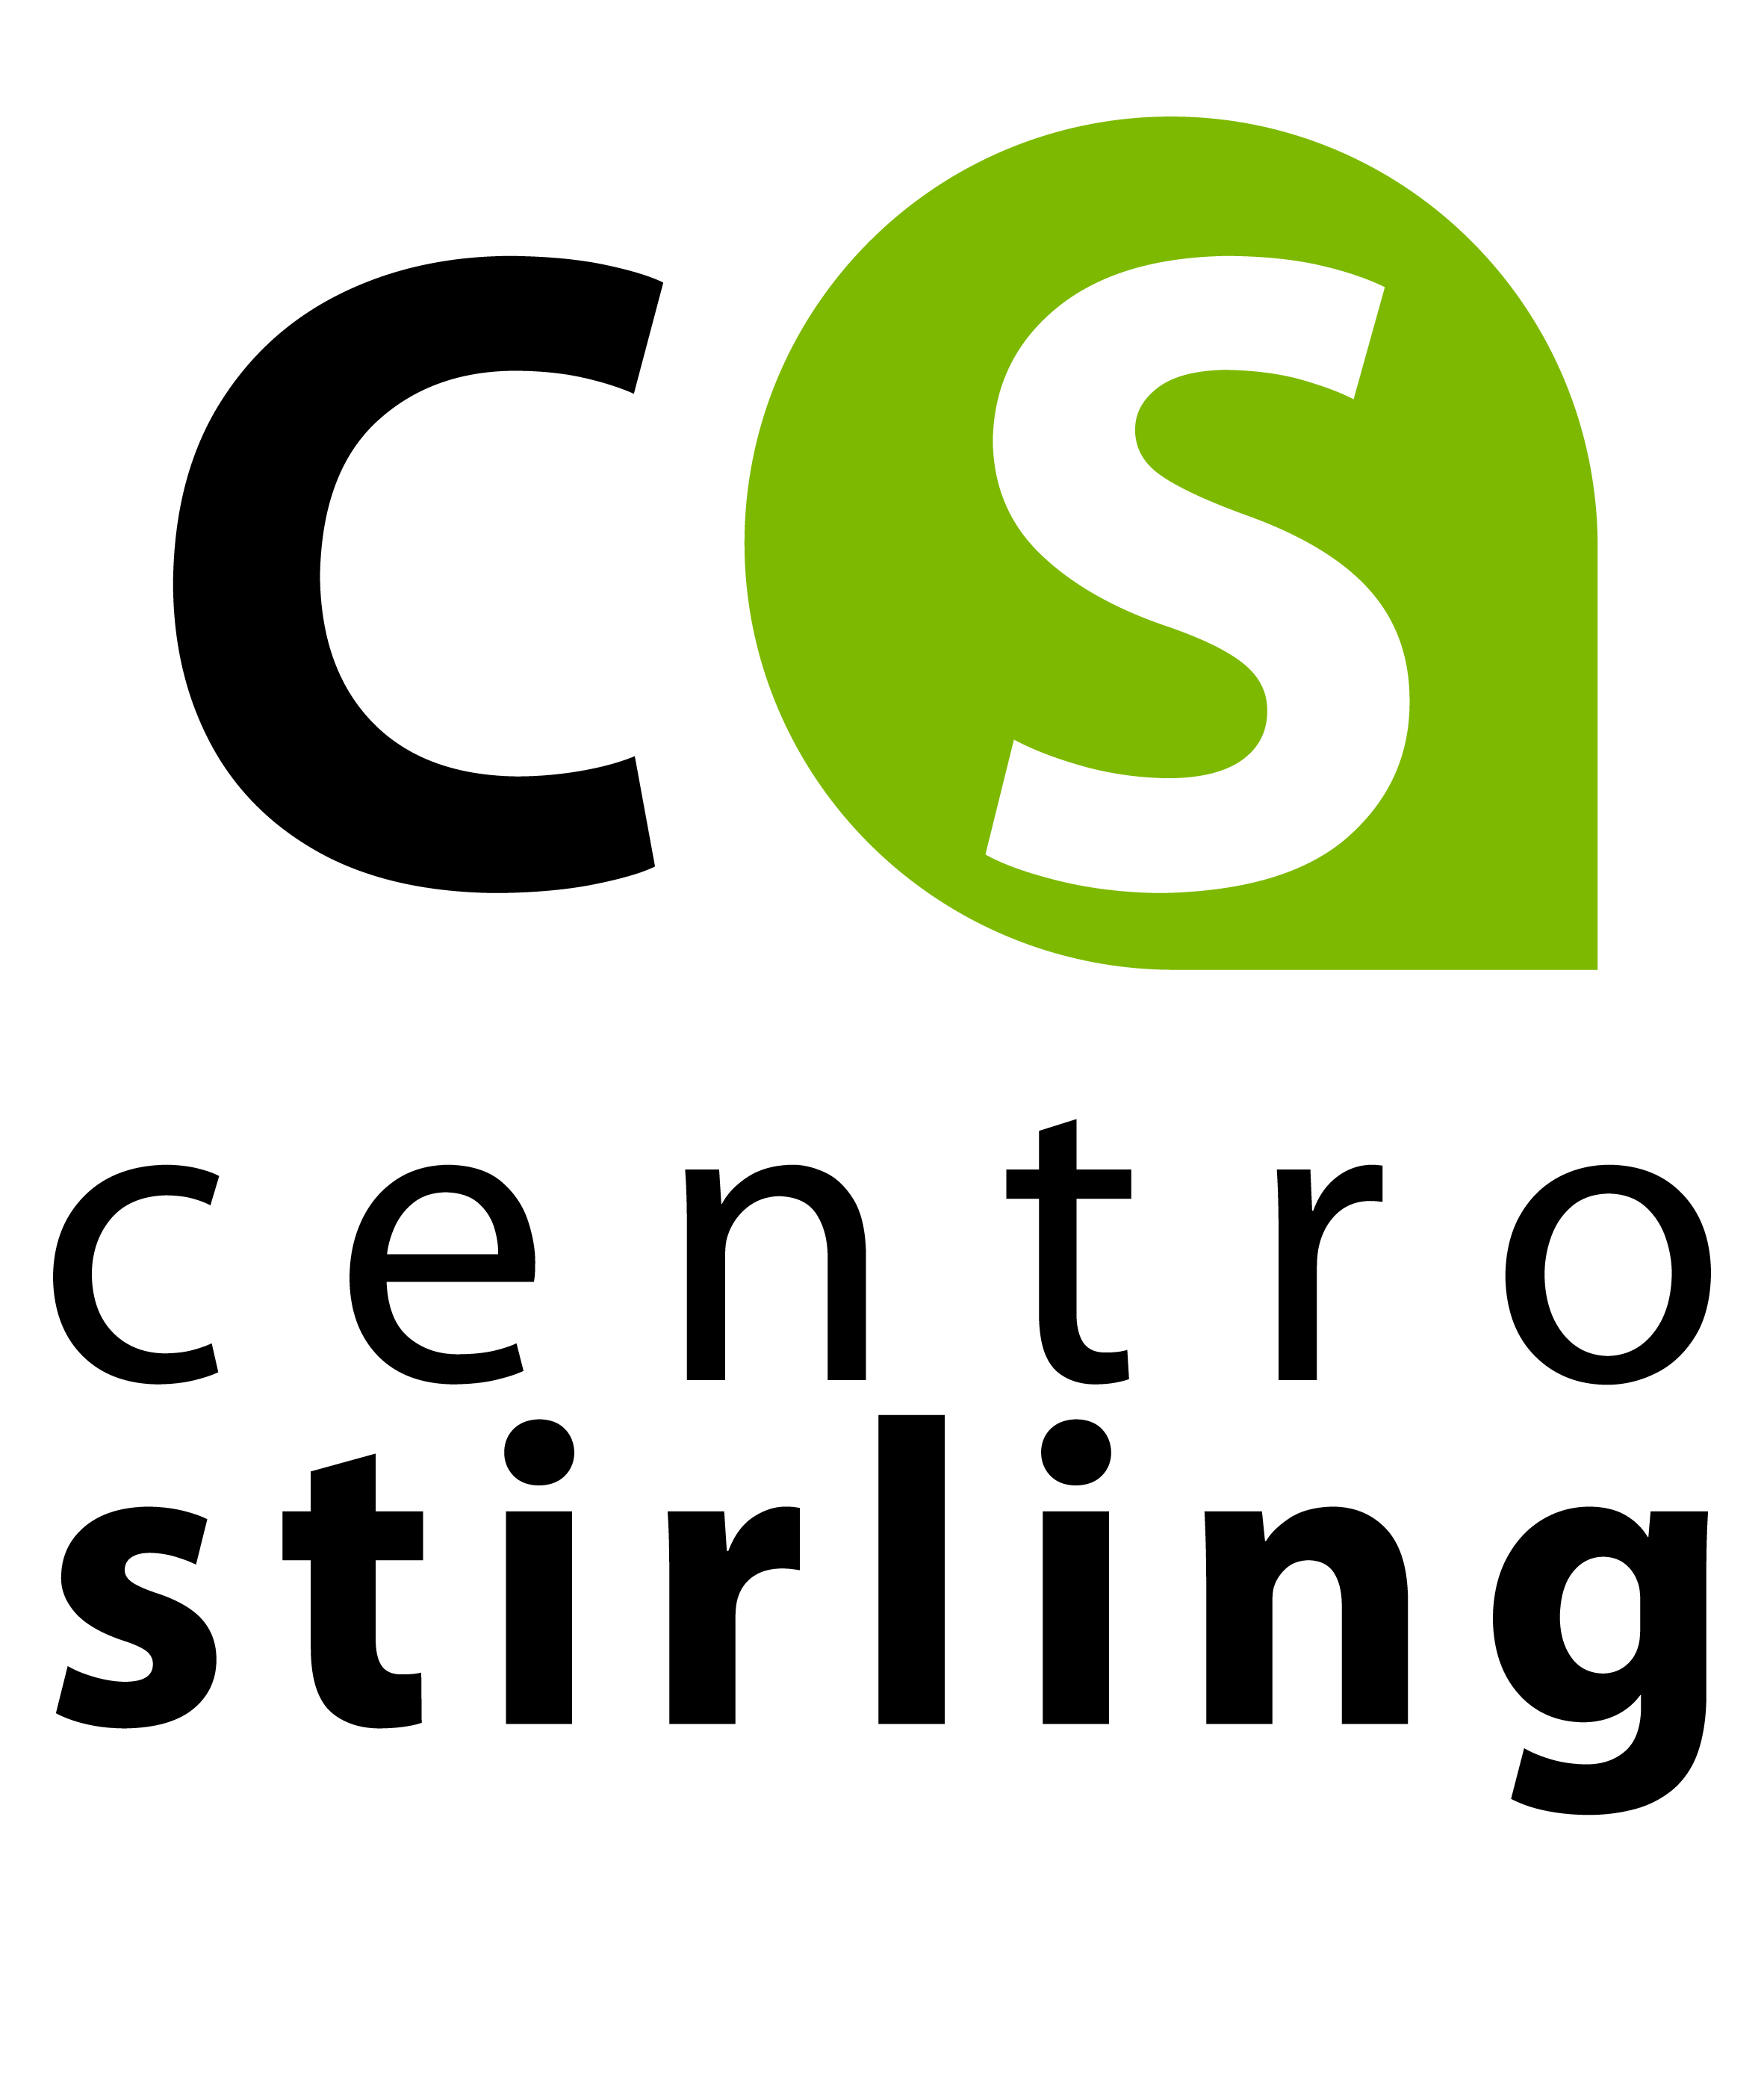 CENTRO STIRLING